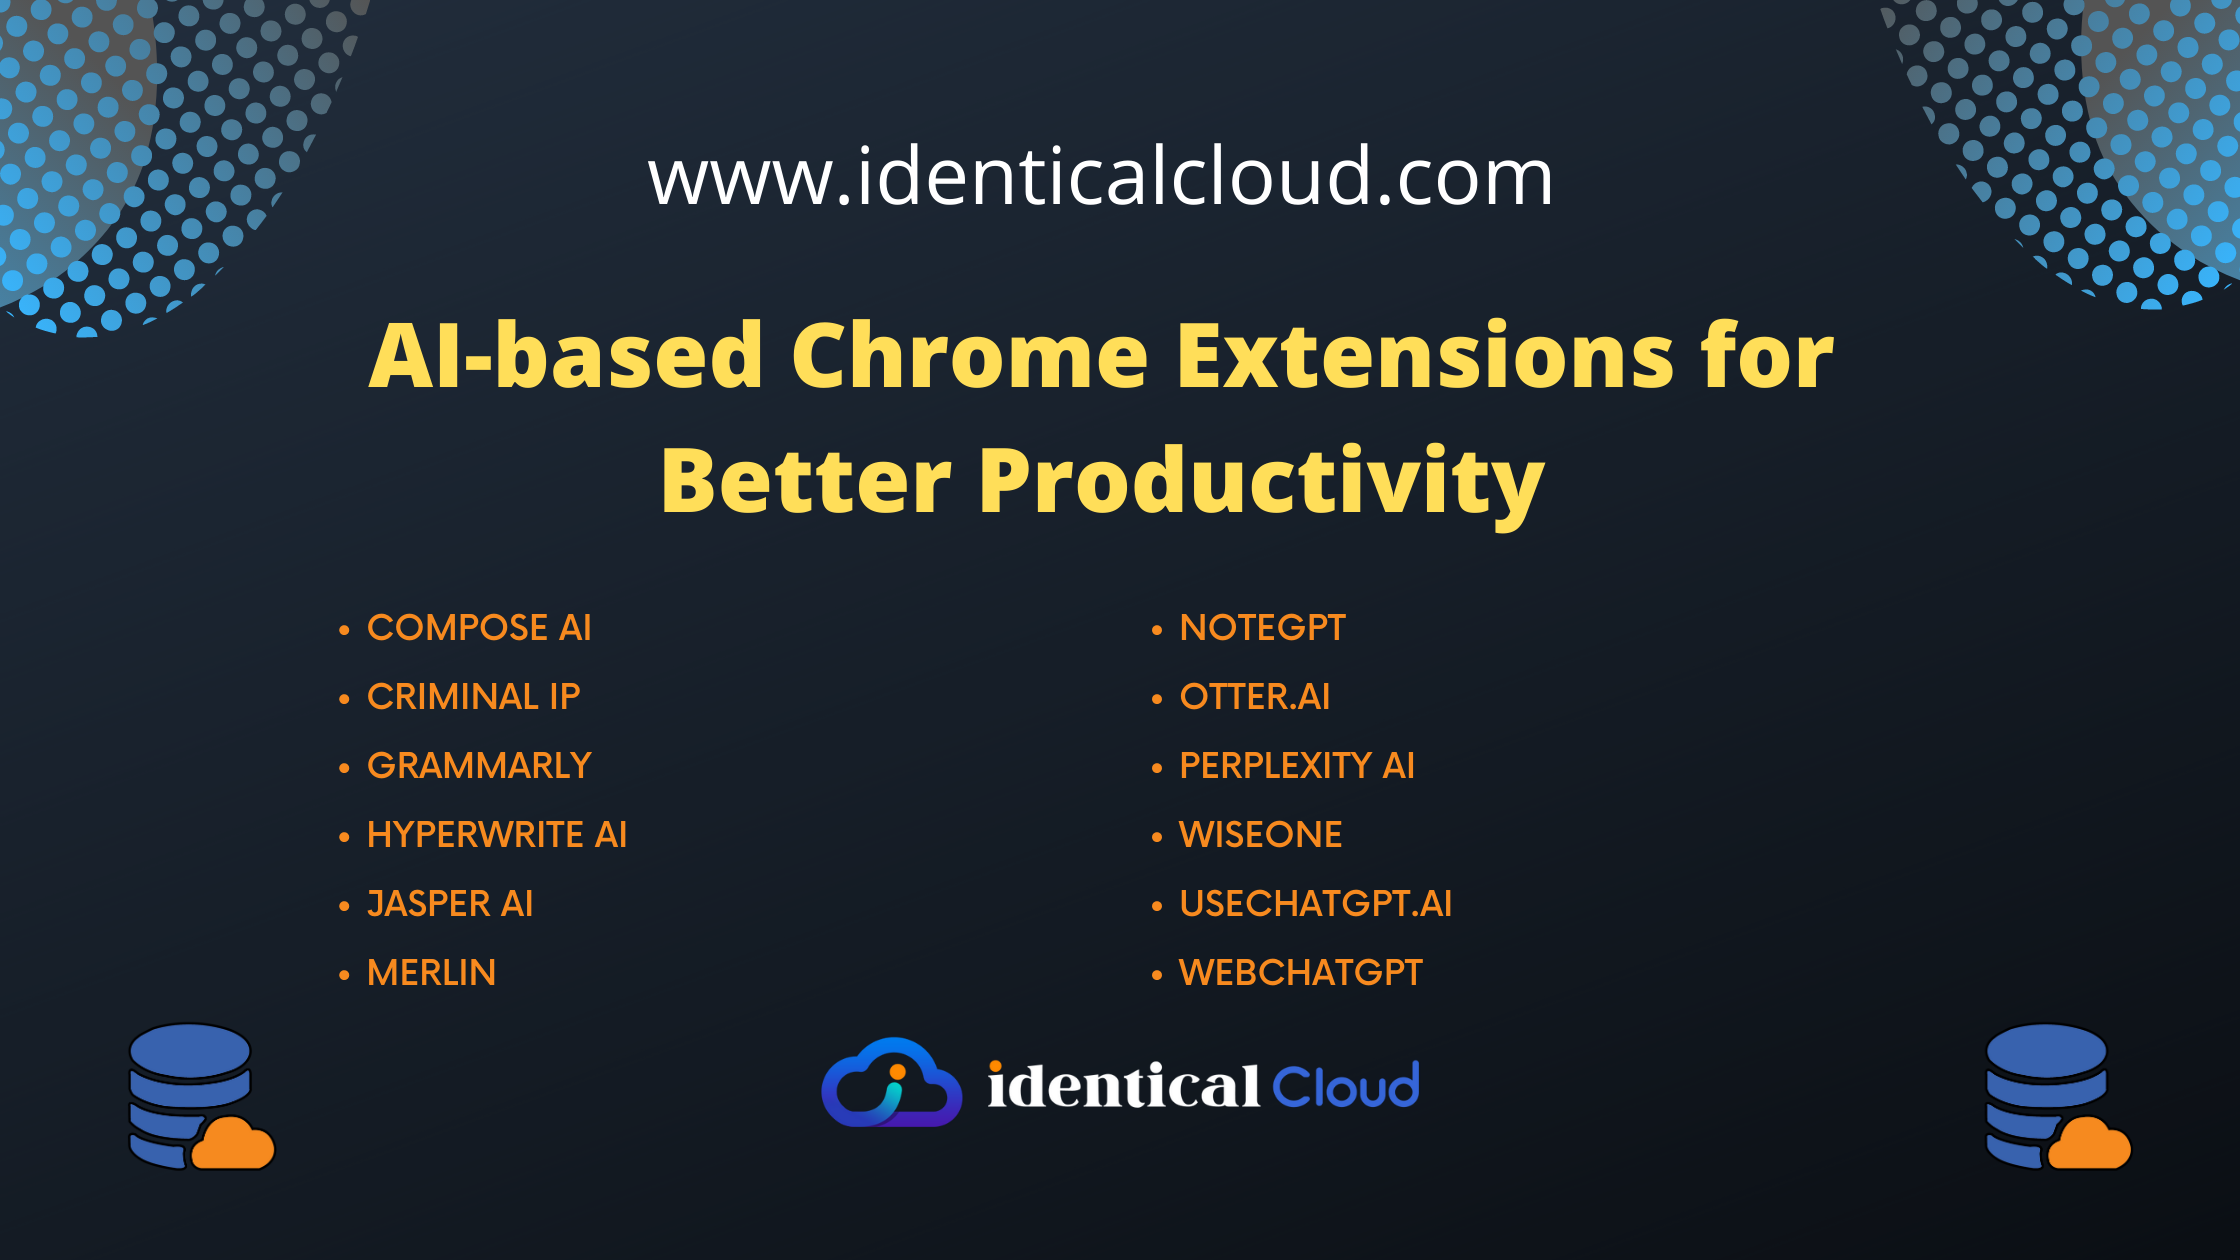 AI-based Chrome Extensions for Better Productivity - identicalcloud.com